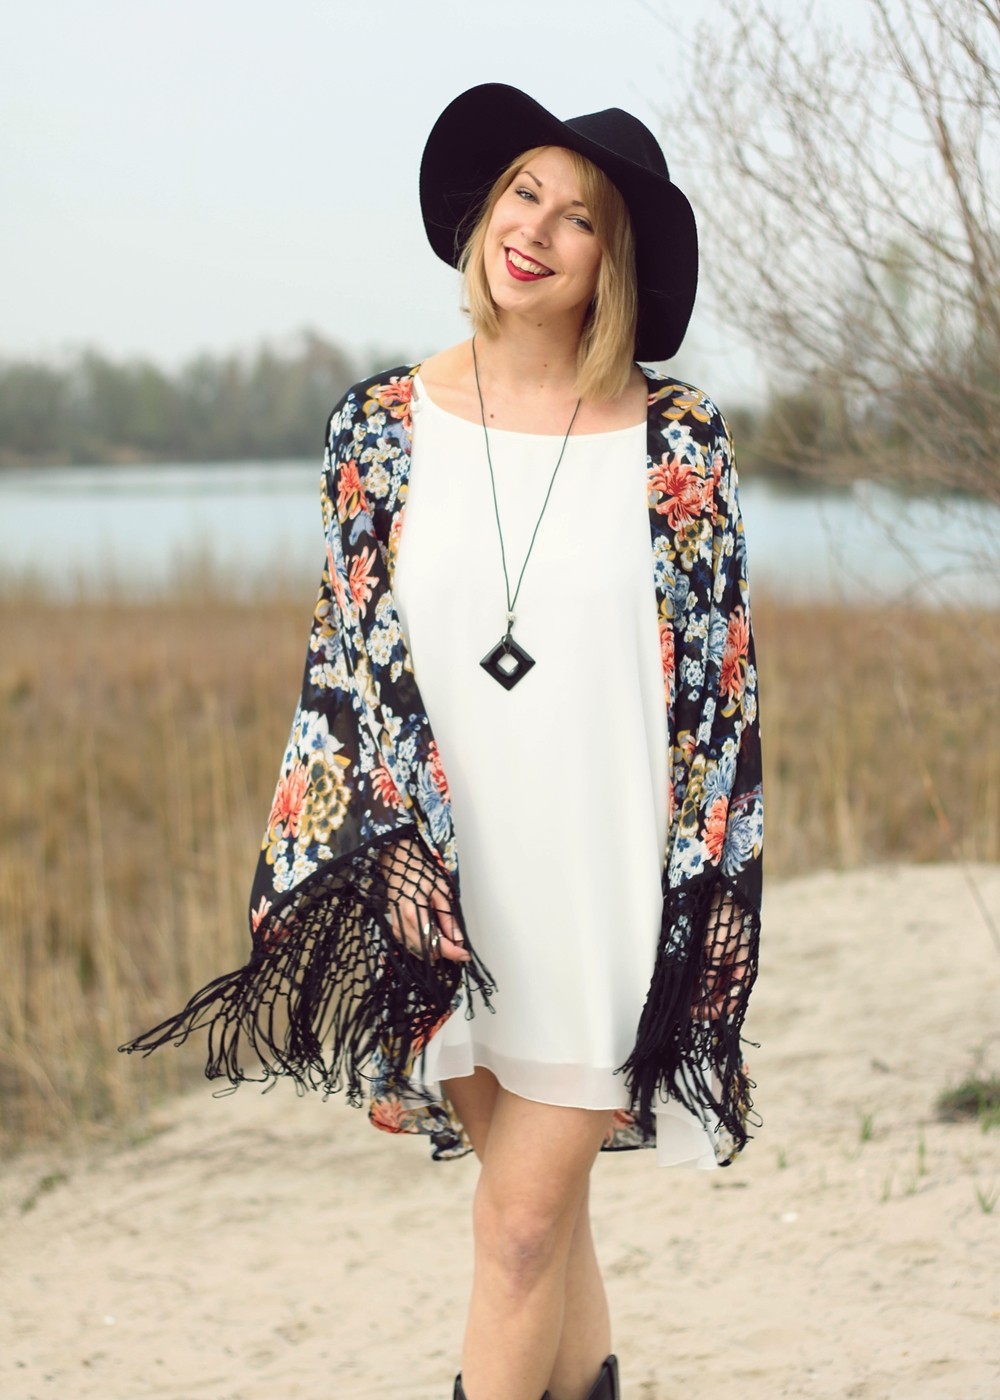 Fashionblogger Outfit Kimono weisses Kleid Cowboystiefel Schlapphut (10)